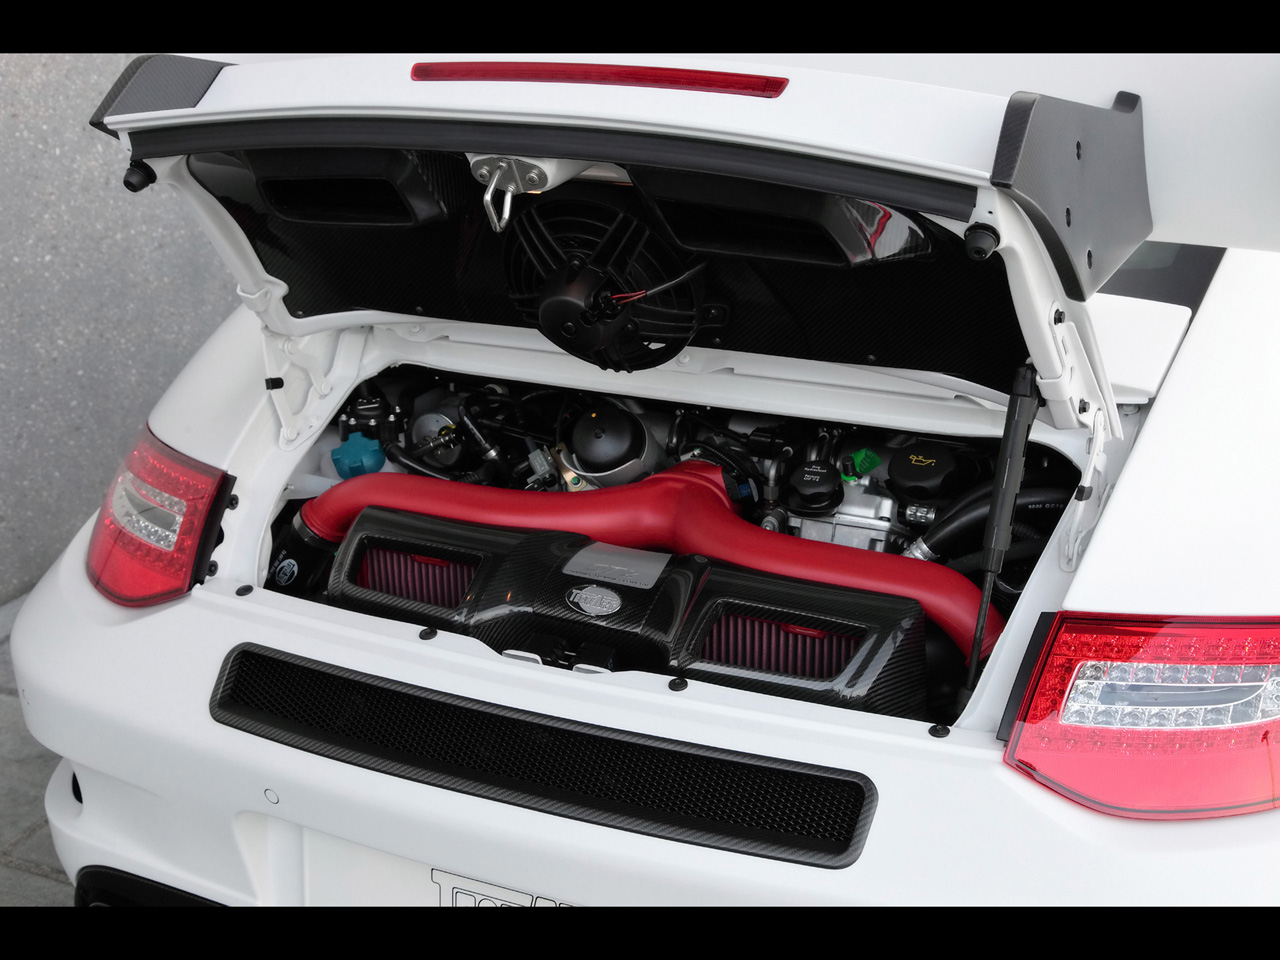 2010 TechArt GT Street RS based on Porsche 911 GT2